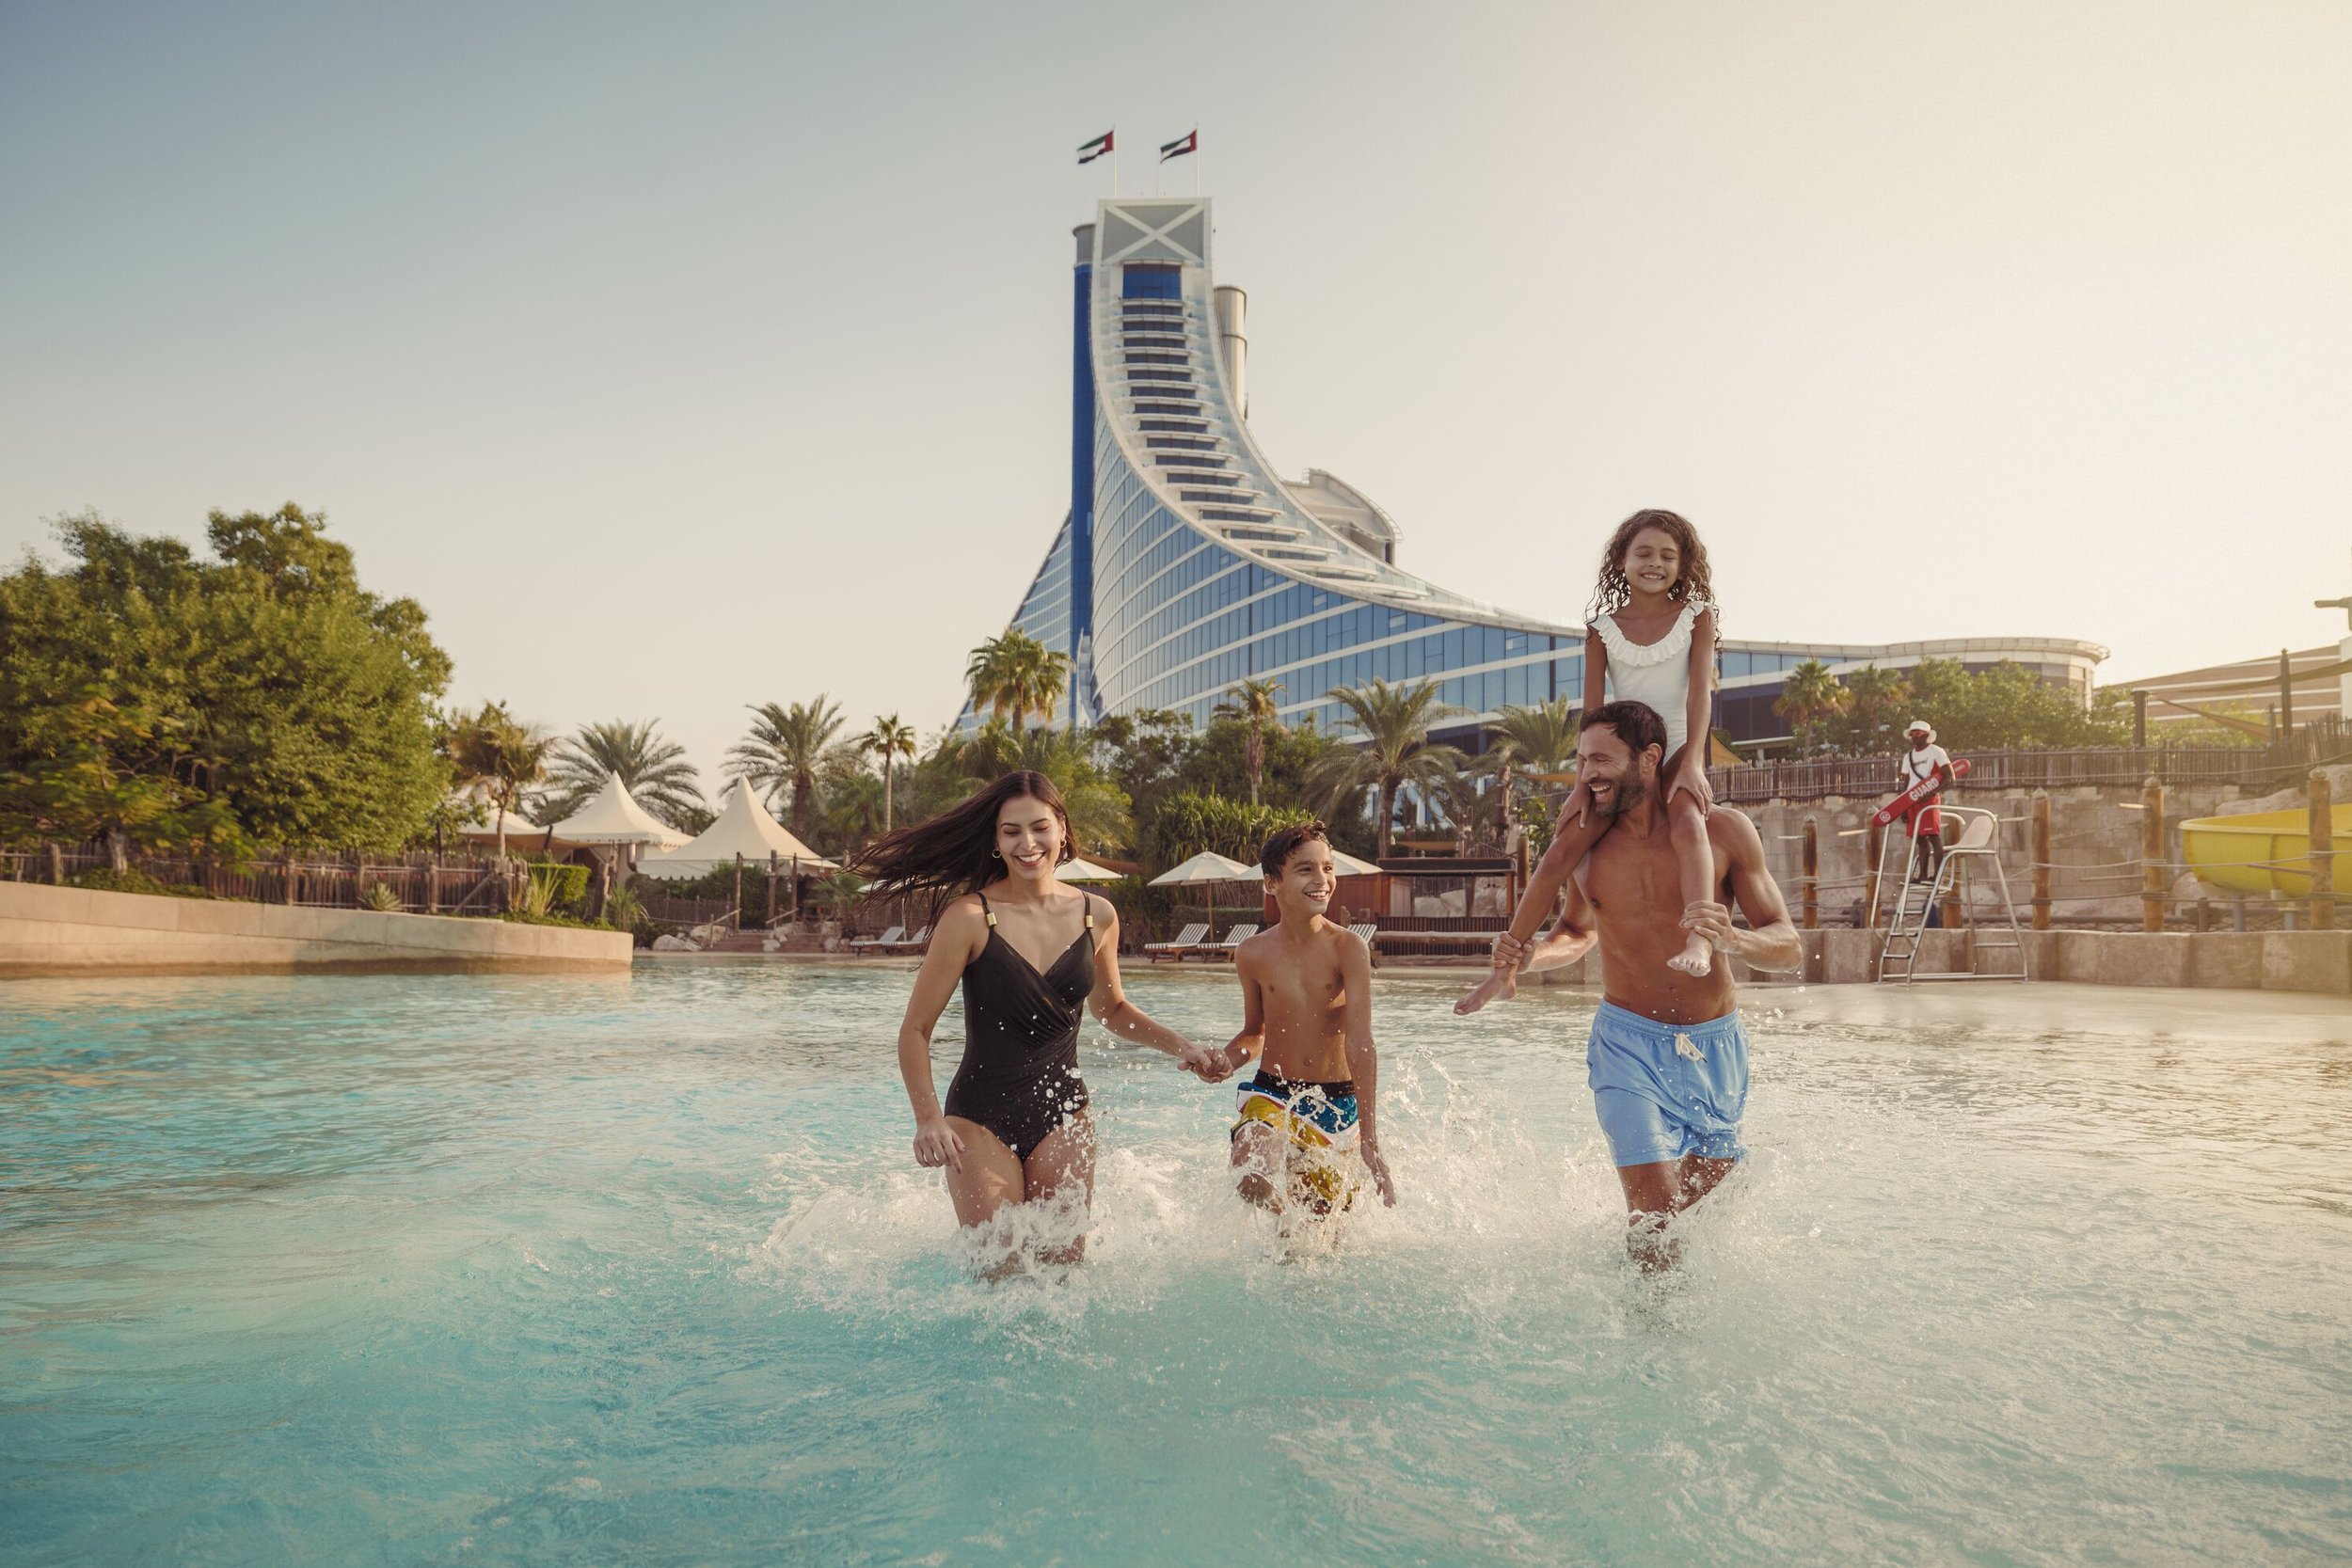 Medium_resolution_150dpi-Jumeirah Beach Hotel - Lifestyle - Play - Wave Pool - Family Running Wide.jpg